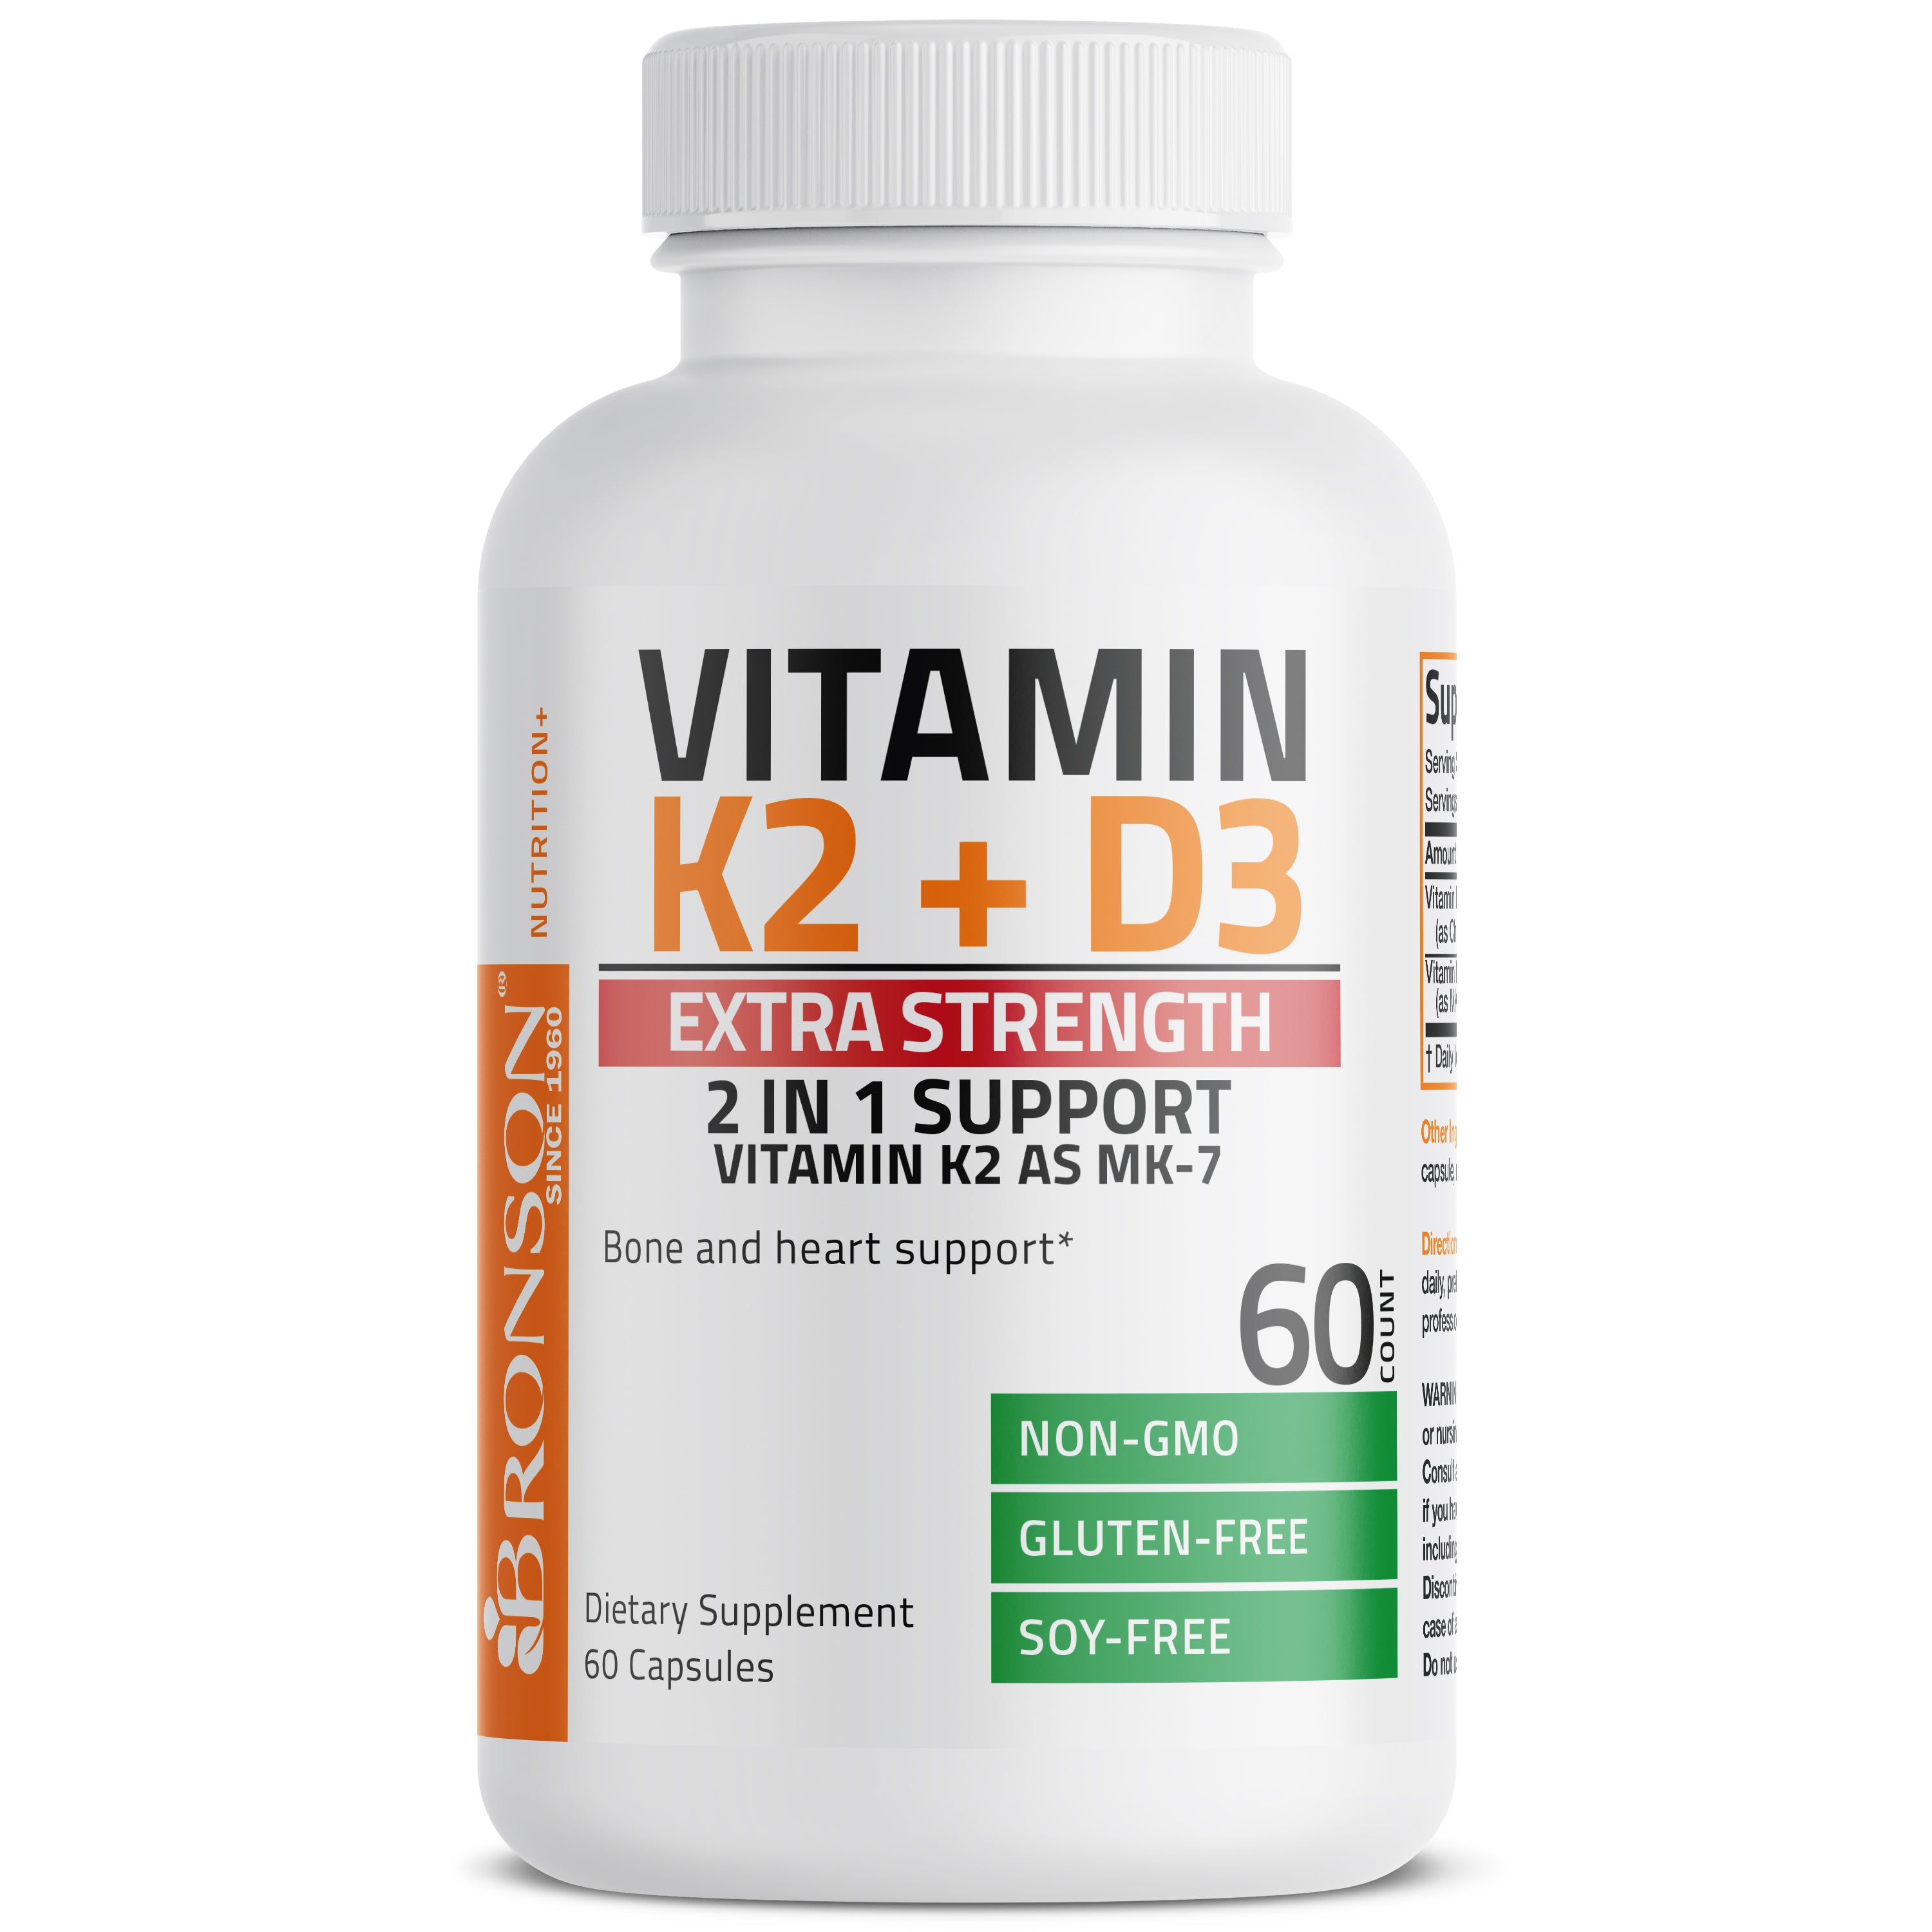 Vitamin K2 MK-7 Plus Vitamin D3 Extra Strength view 3 of 12